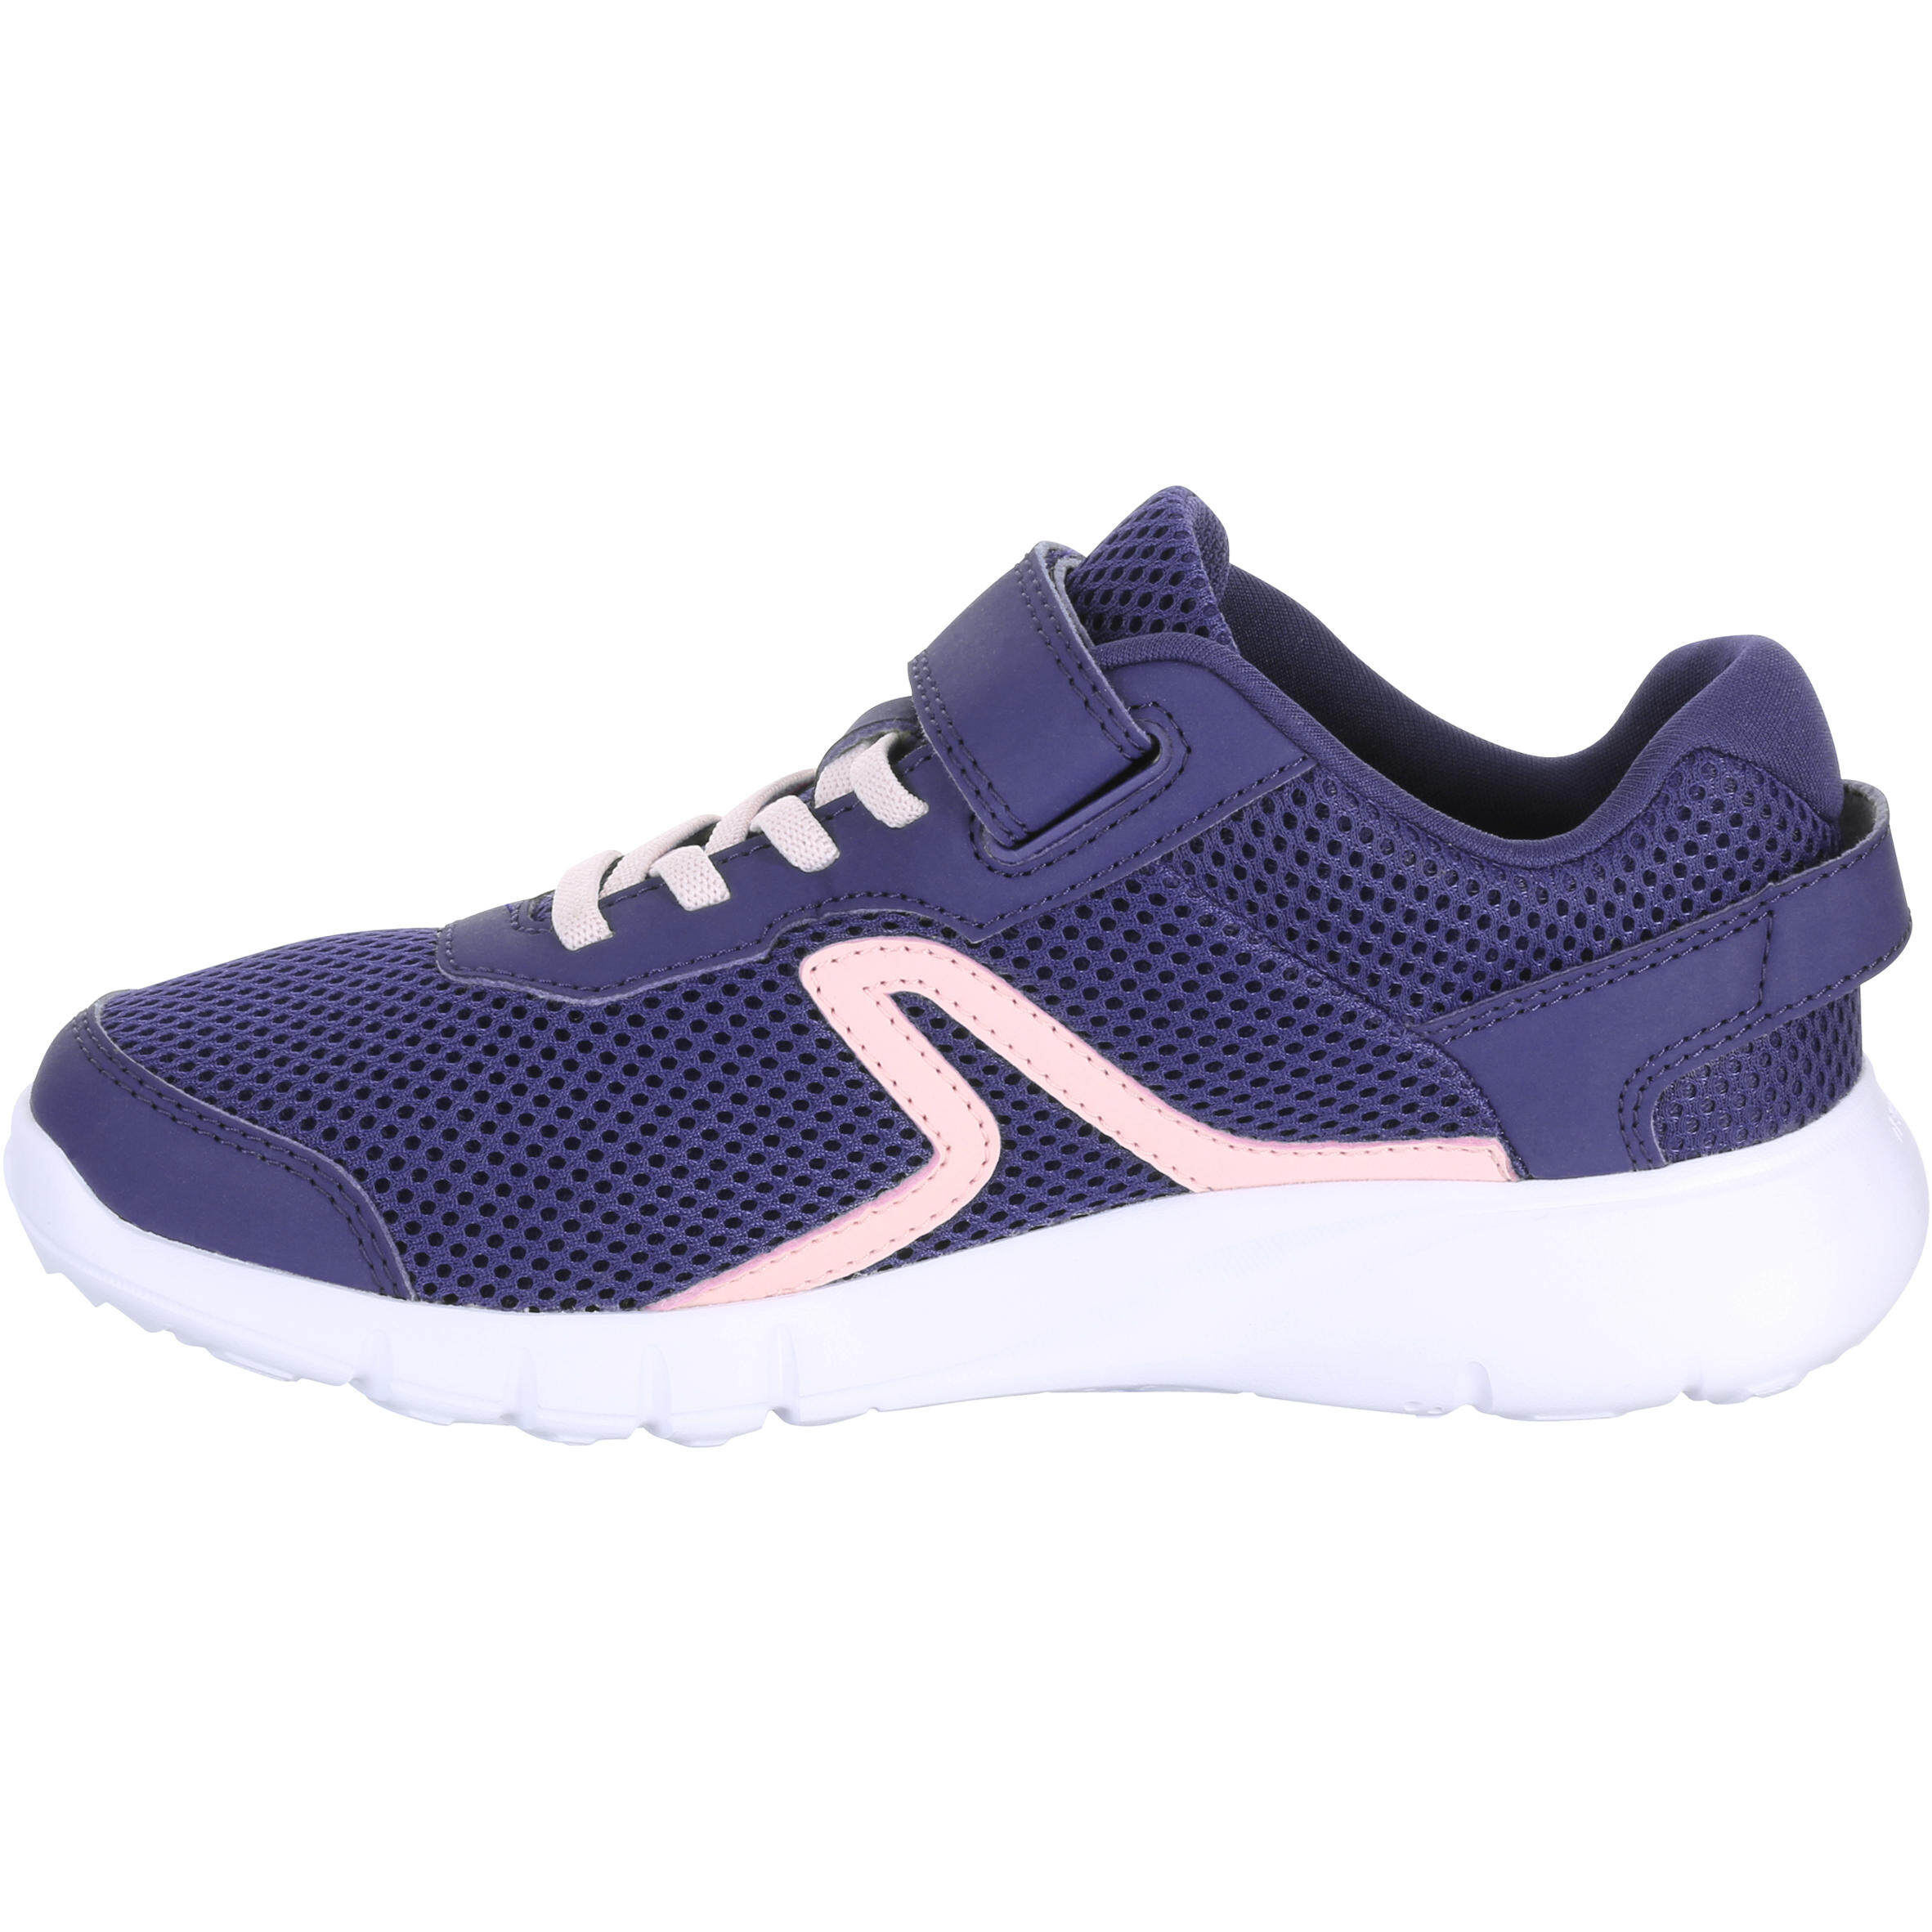 Buy Pw 160 Slip On Walking Shoes For Men Blue Online | Decathlon